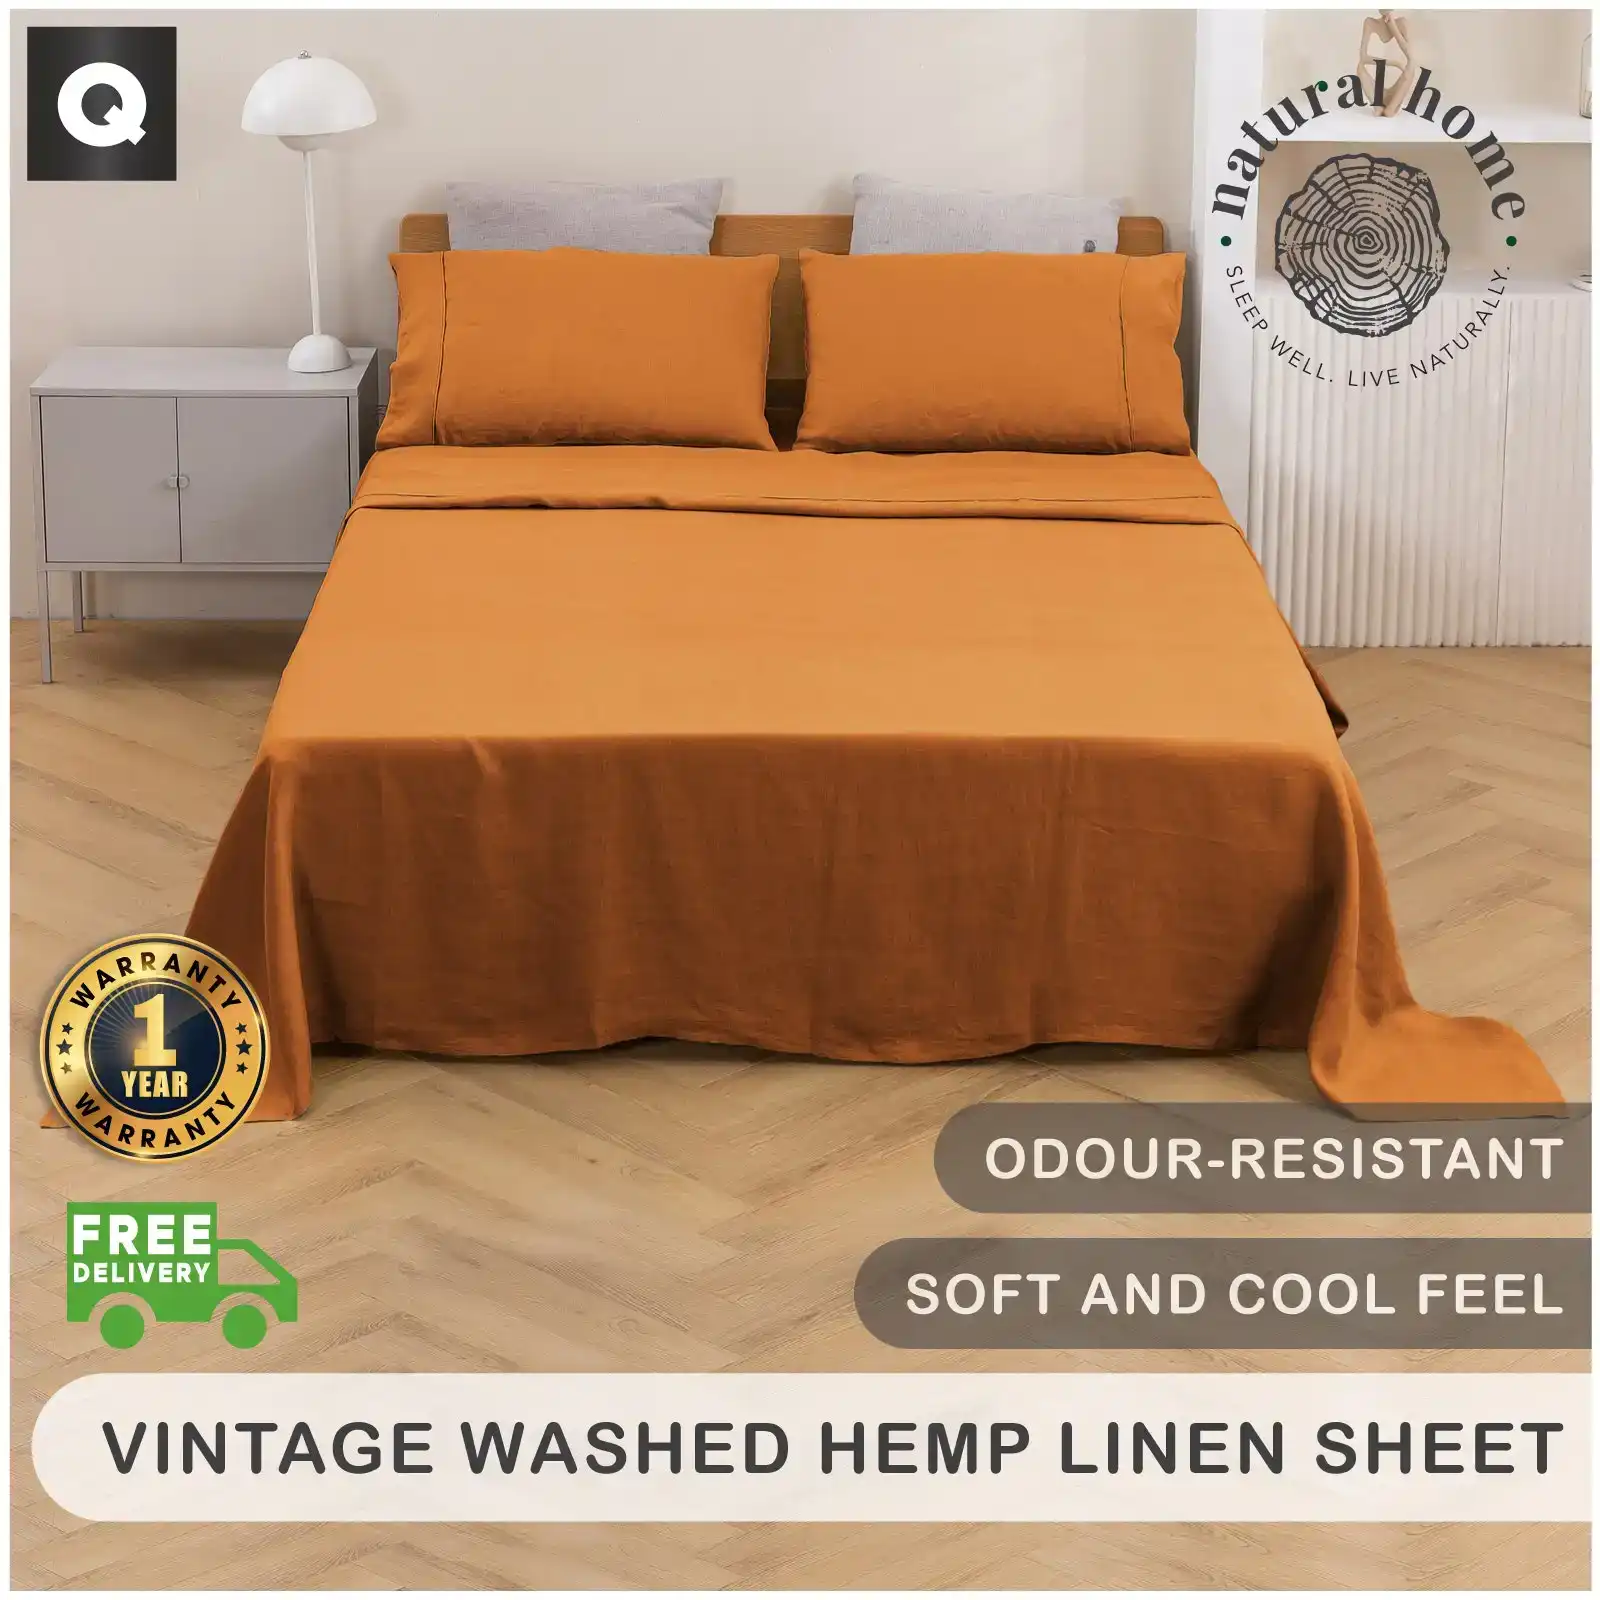 Natural Home Vintage Washed Hemp Linen Sheet Set Rust Queen Bed